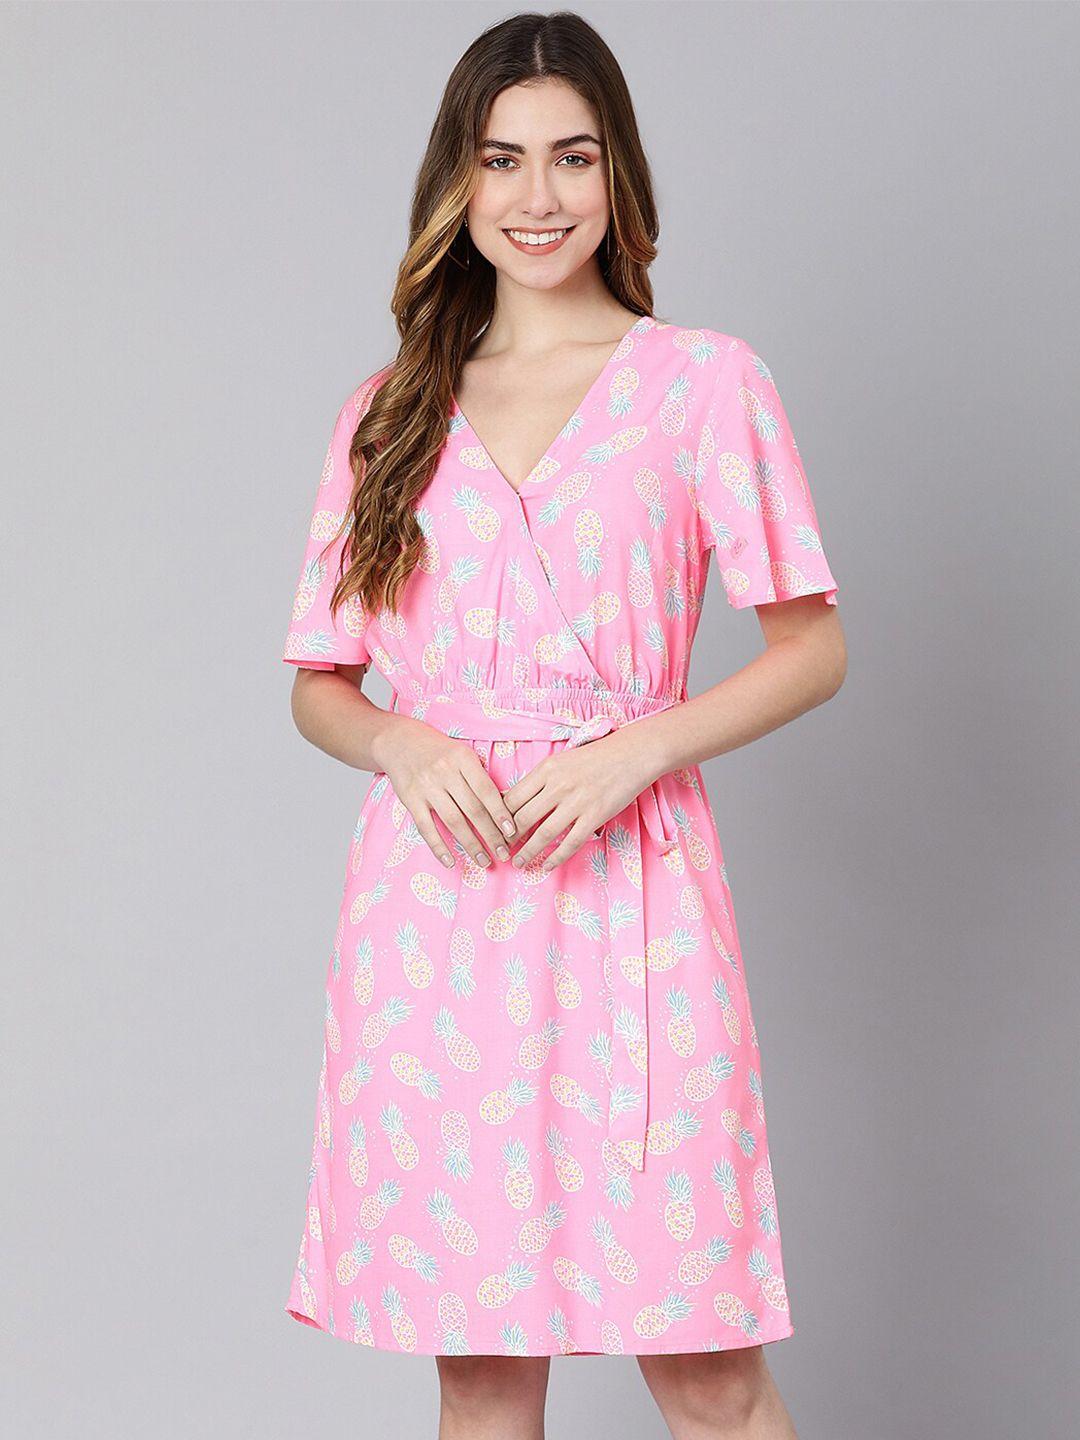 oxolloxo-women-pink-crepe-dress